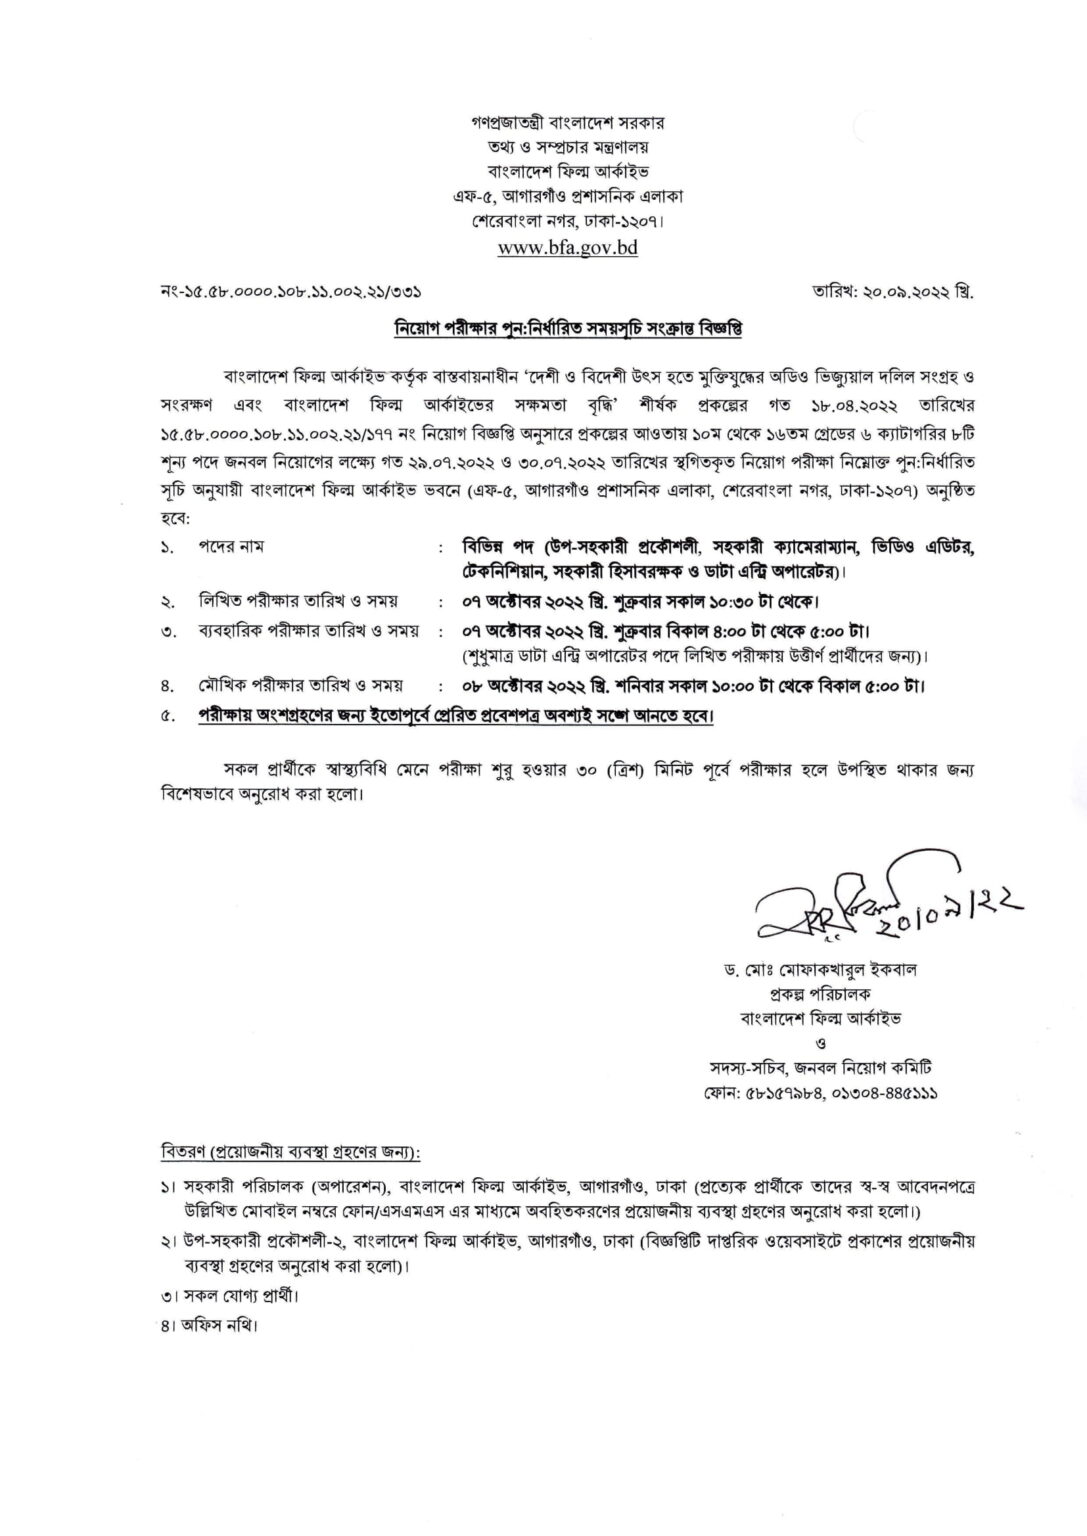 Bangladesh-Film-Archive-Exam-Date-2022-PDF-1-1087x1536